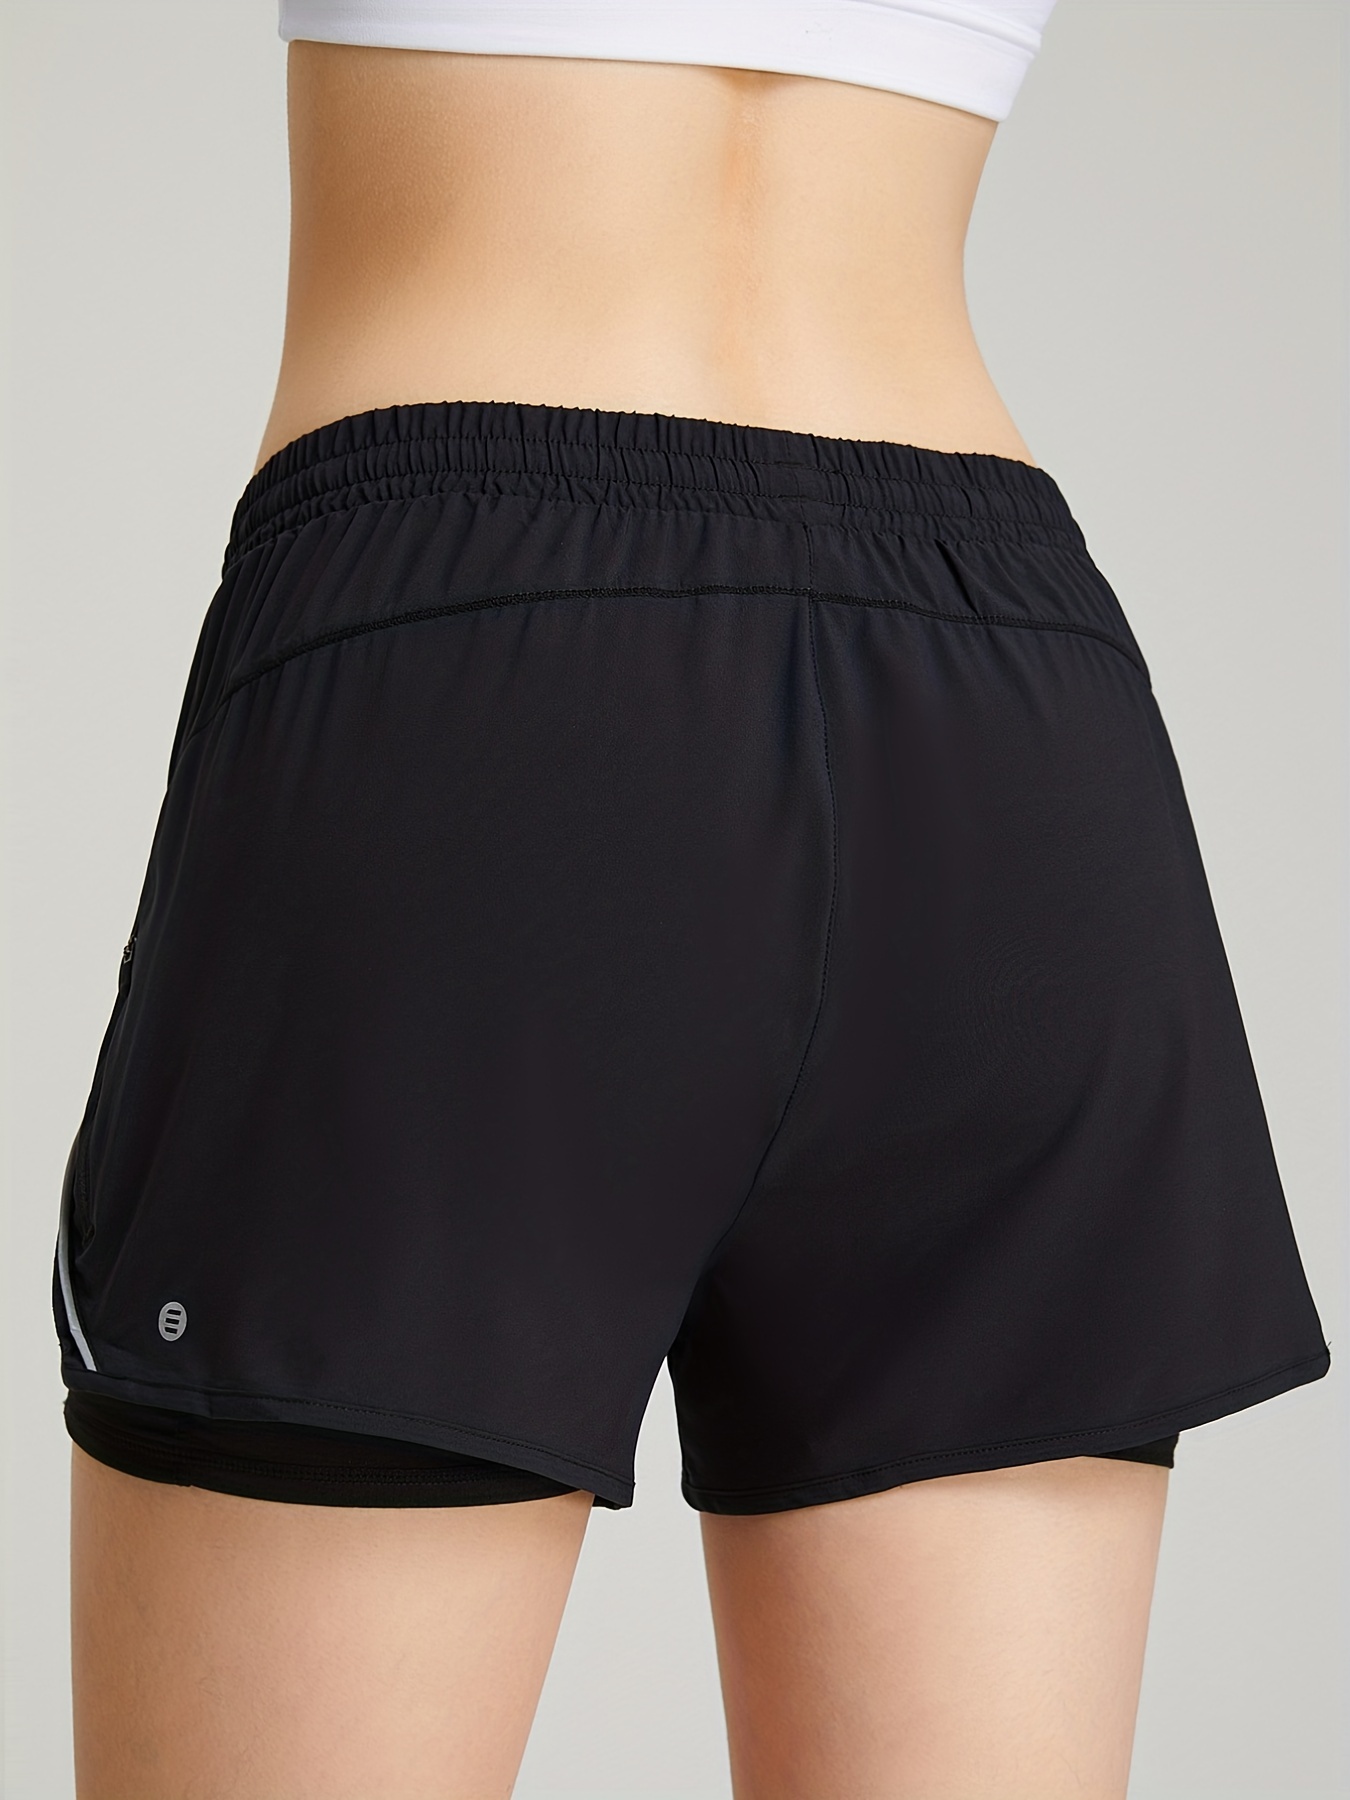 Black 2 In 1 Running Shorts High Waist Side Zippered Pockets